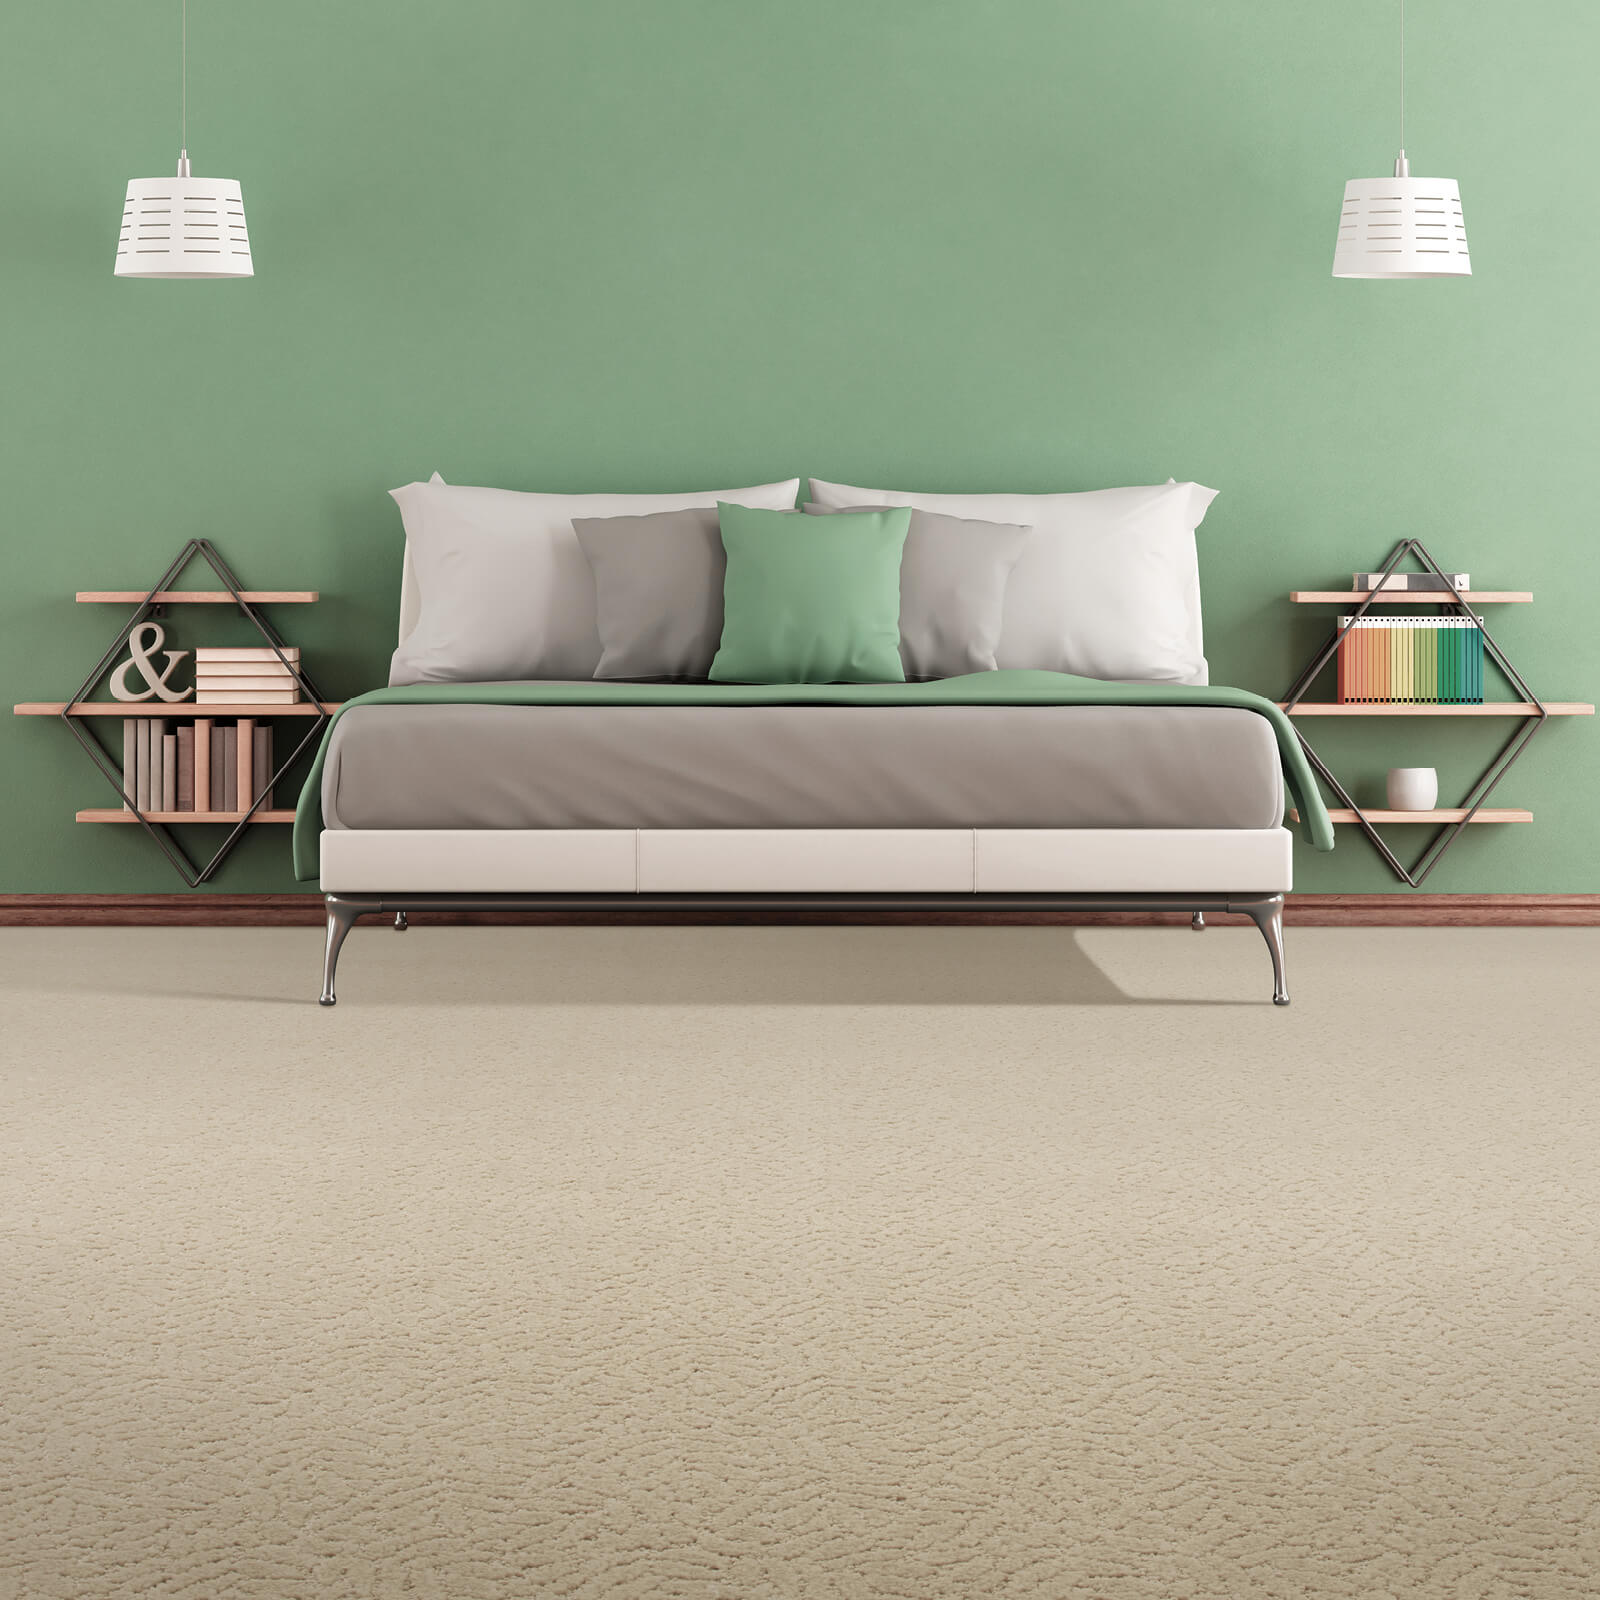 Natural Settings of carpet | Flooring by Wilson's Carpet Plus